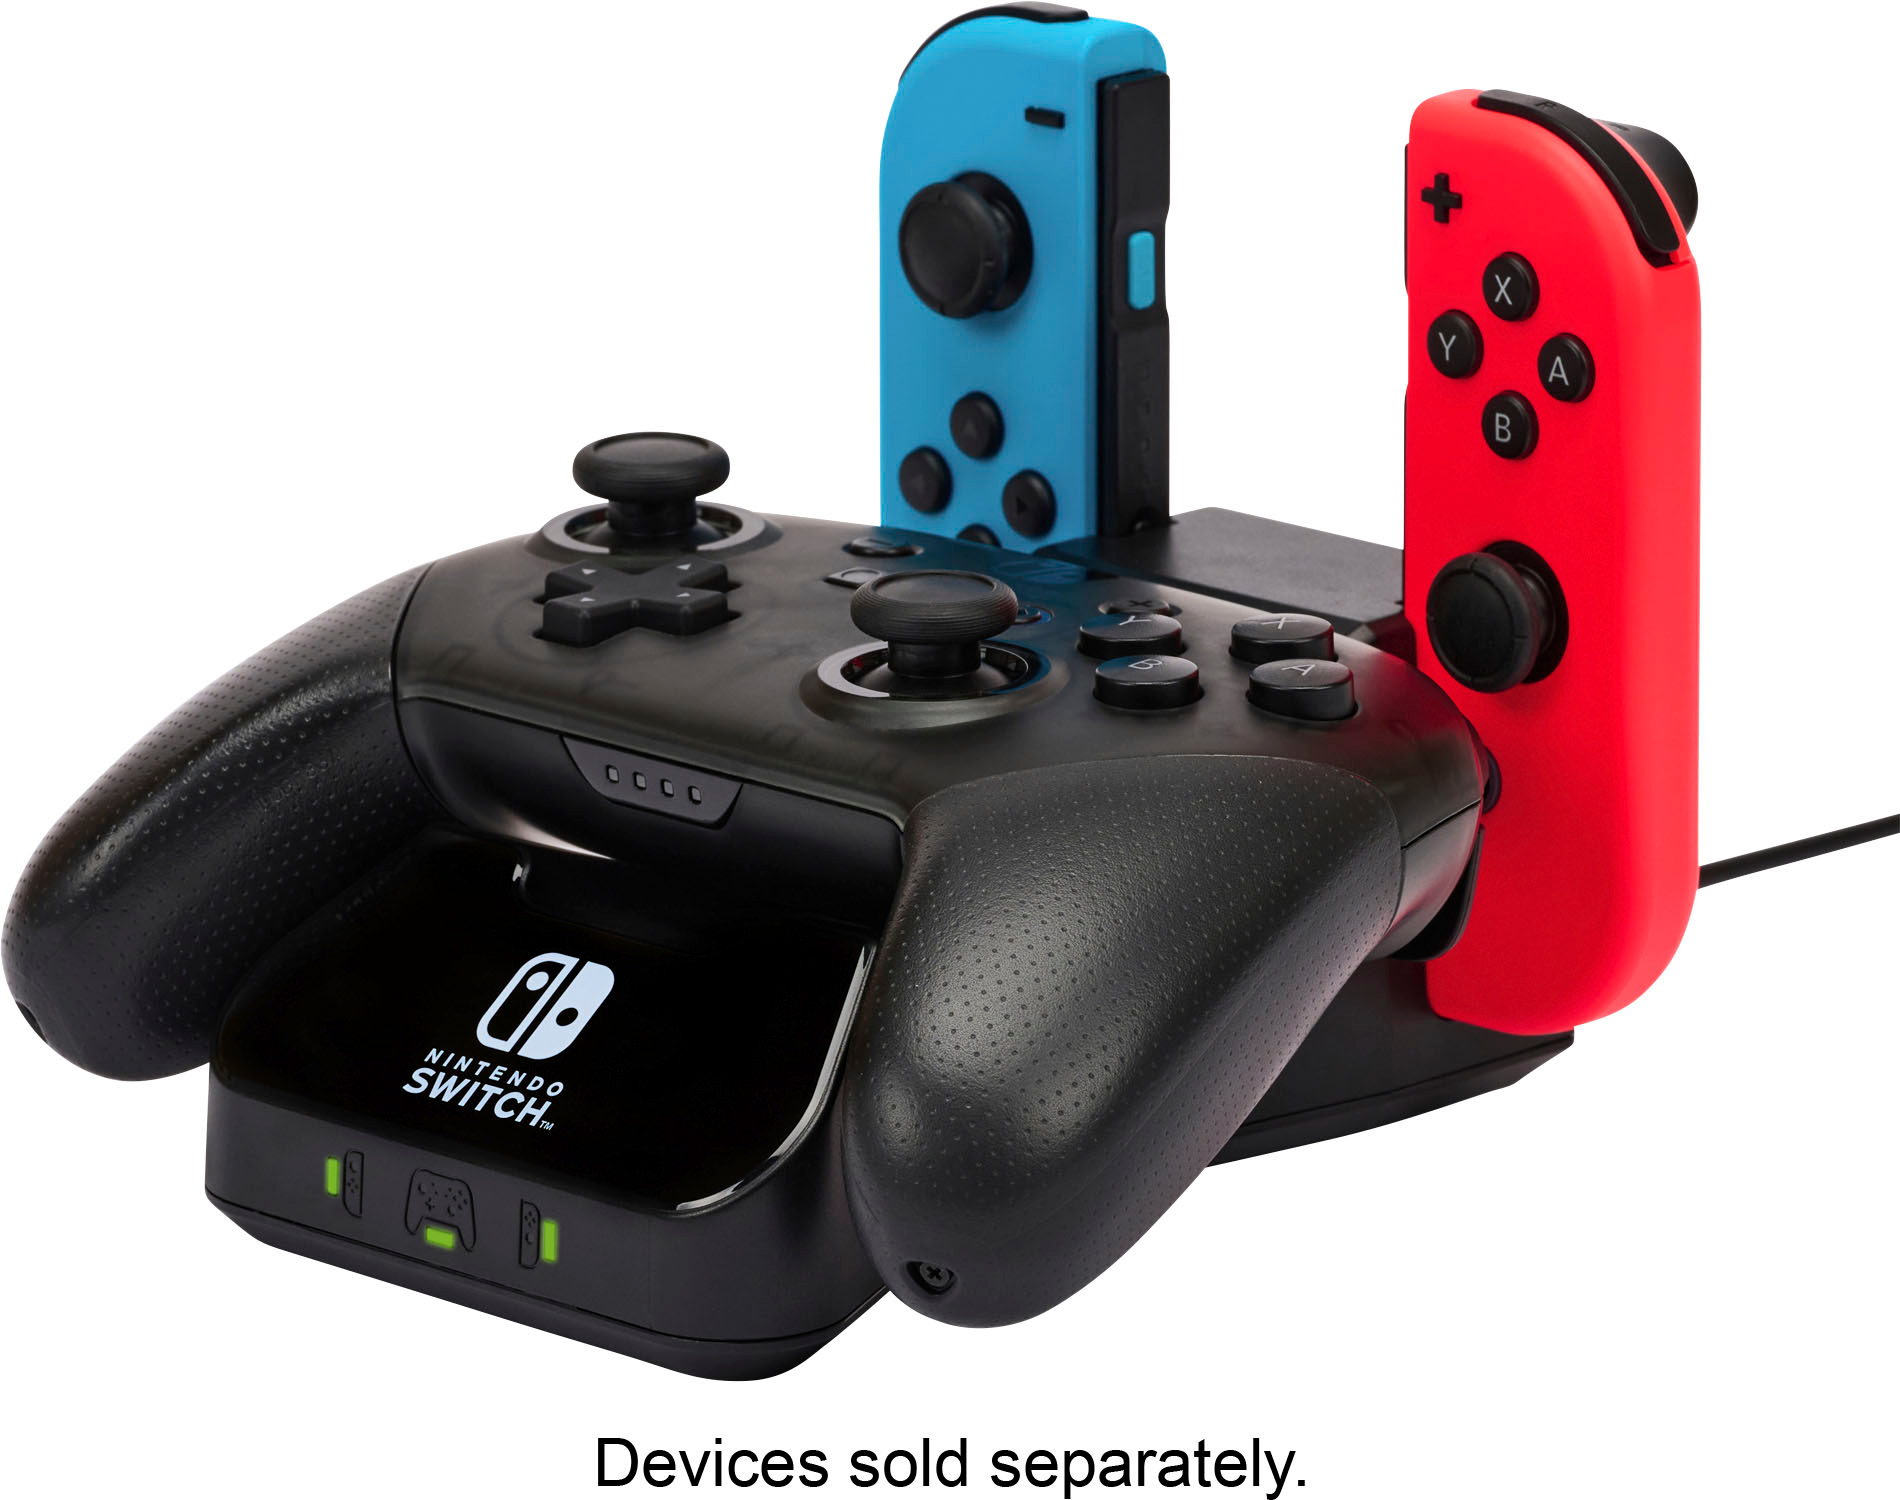  PowerA Enhanced Wireless Controller for Nintendo Switch - Hades  : Video Games